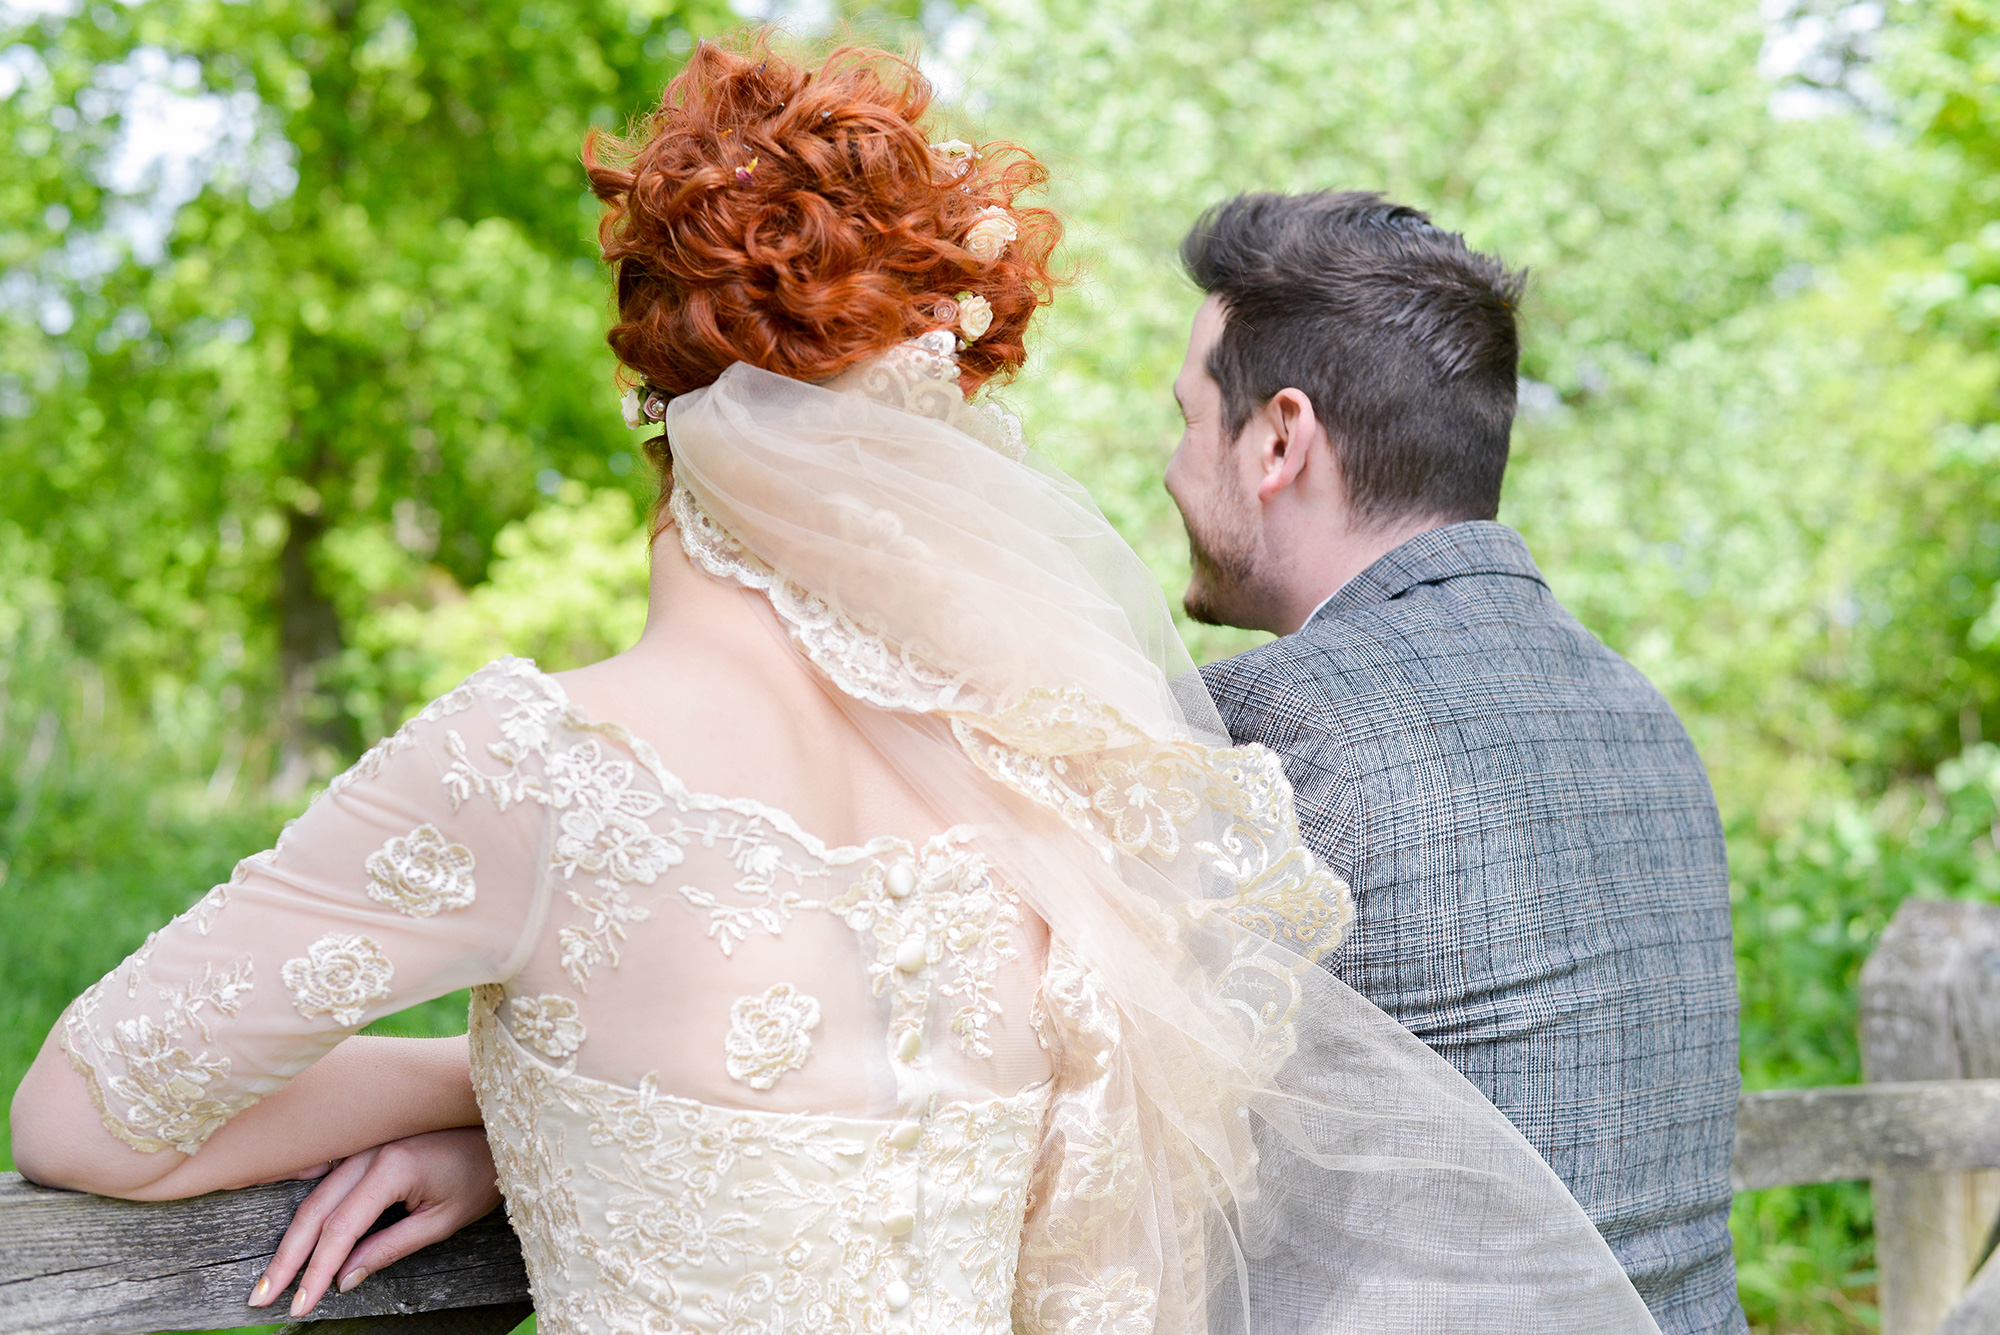 Heather_Darrell_Homemade-Rustic-Wedding_Kimberley-Waterson-Fine-Art-Photography_020